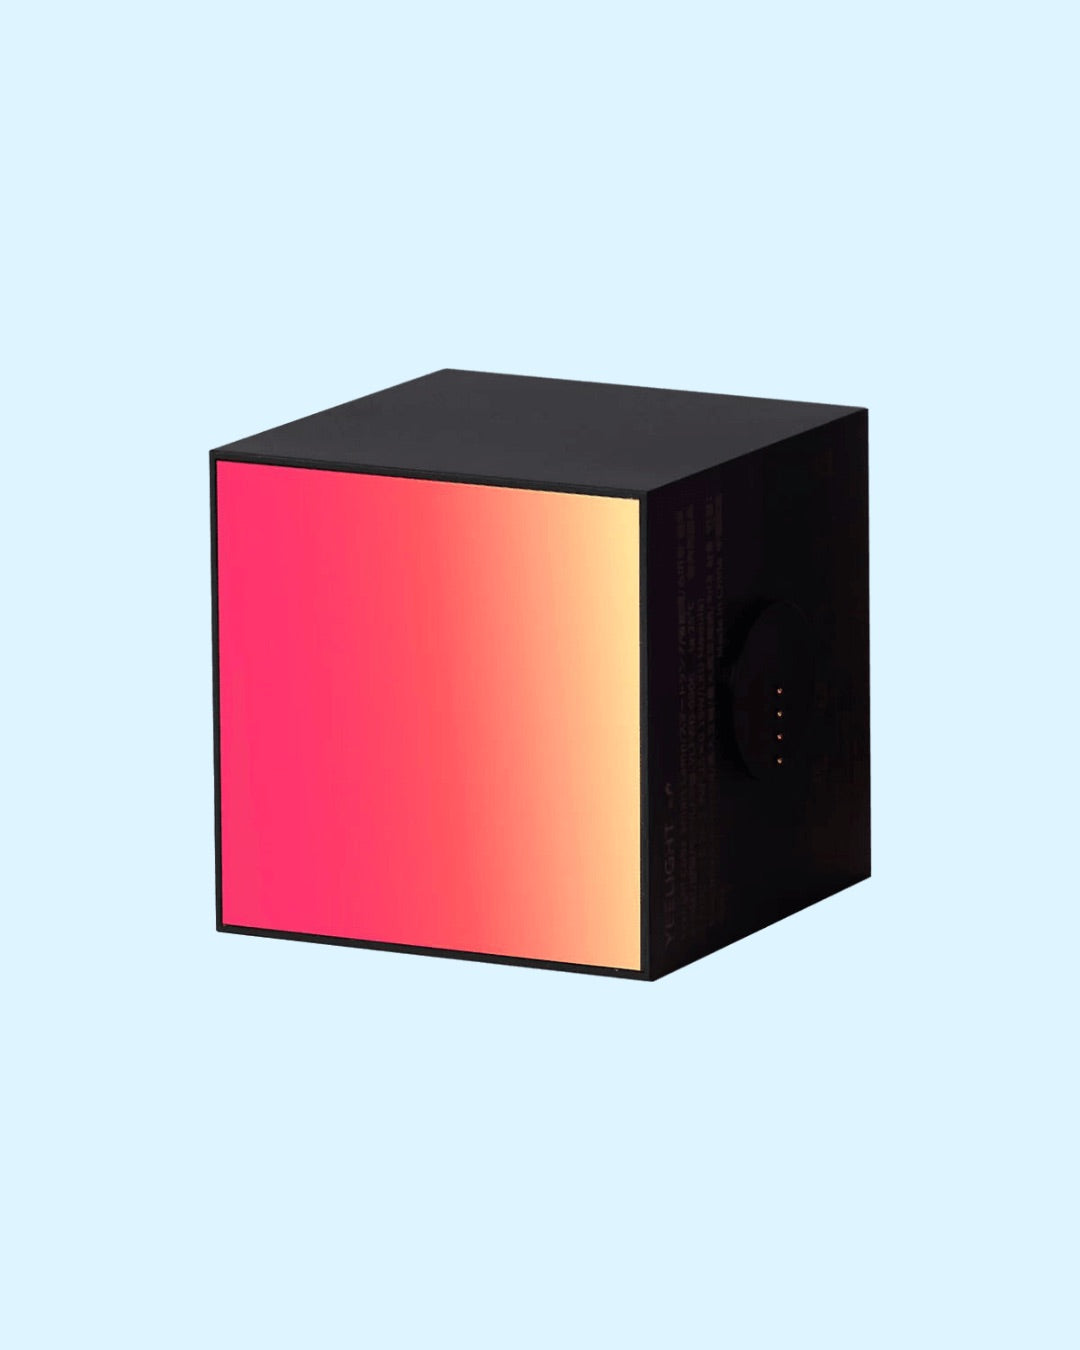 Yeelight Cube Smart Lamp